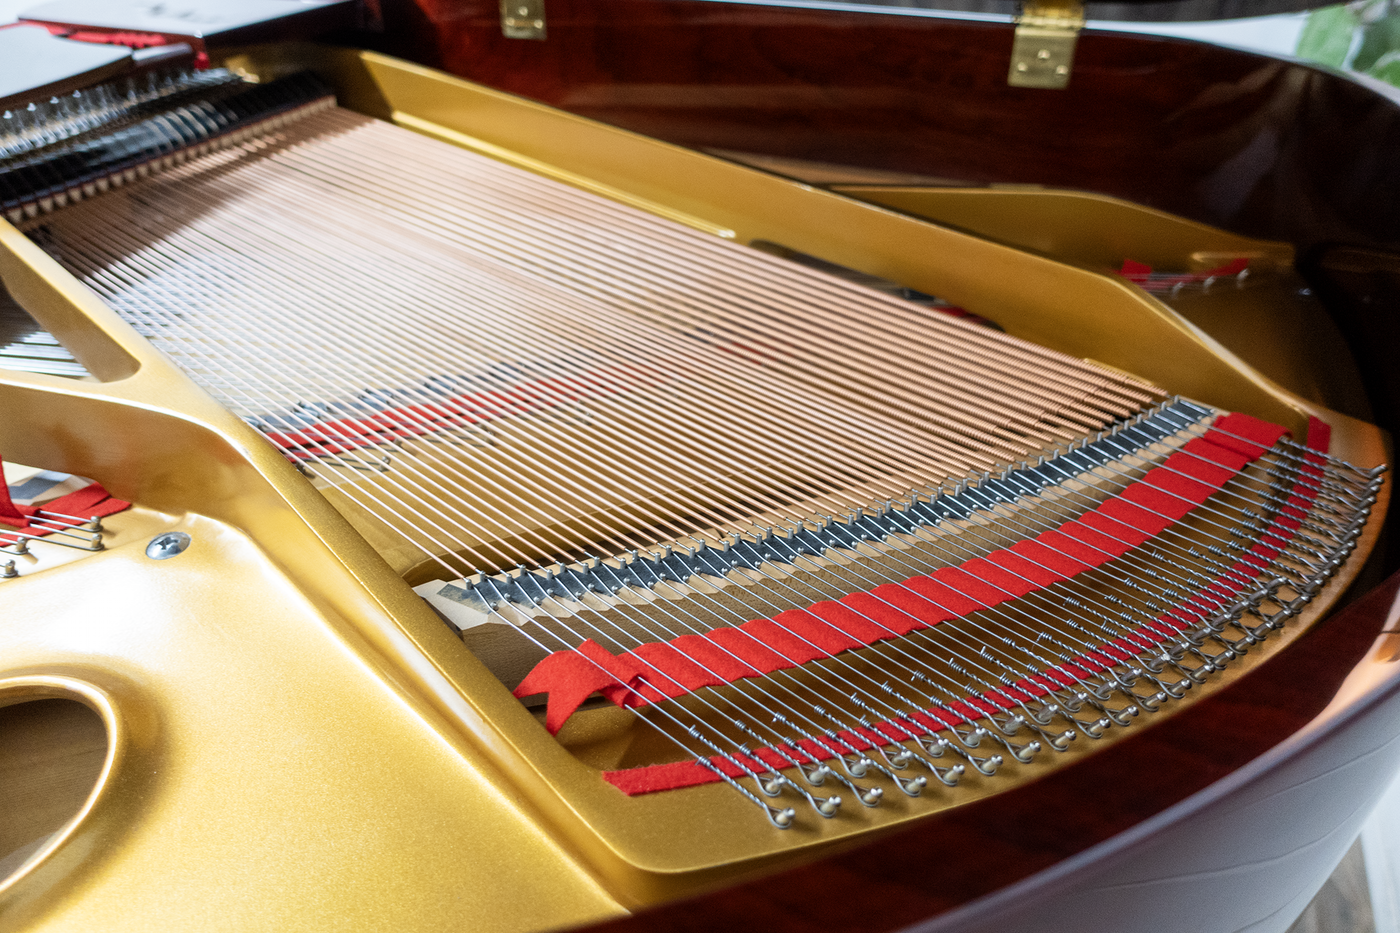 Schumann G-80A Baby Grand Piano